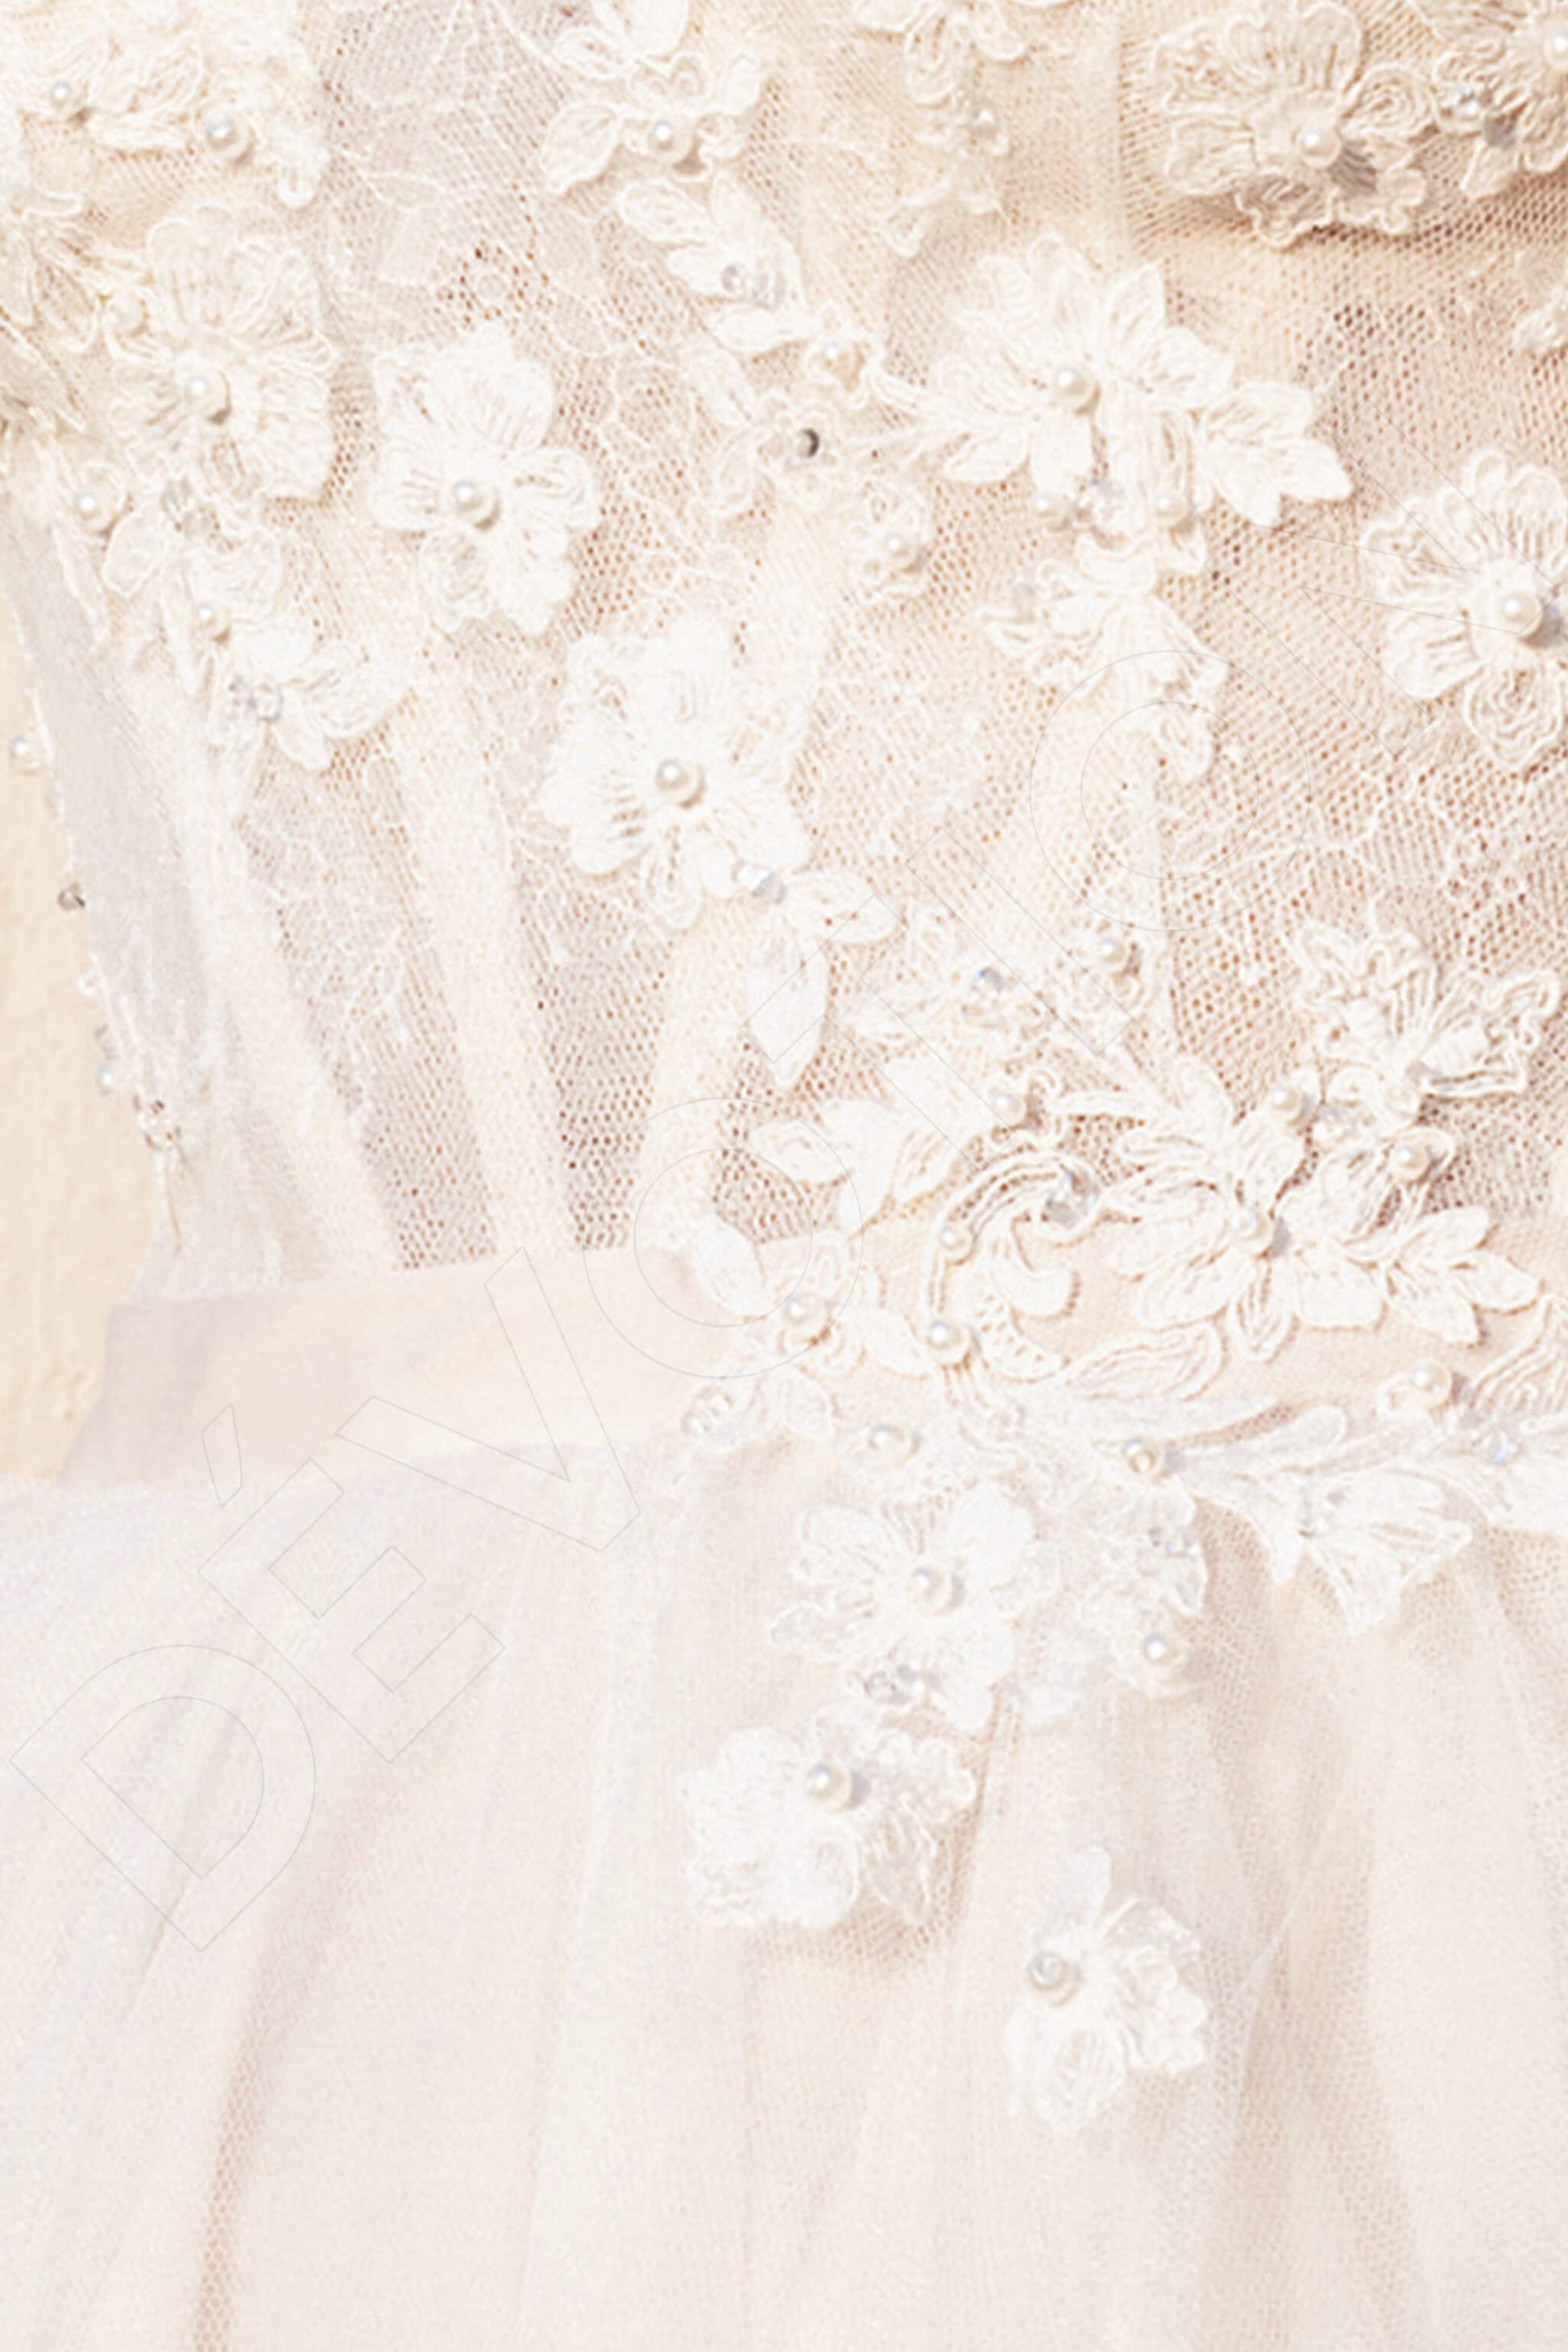 Alsy A-line Semi-Sweetheart Lightivory Wedding dress